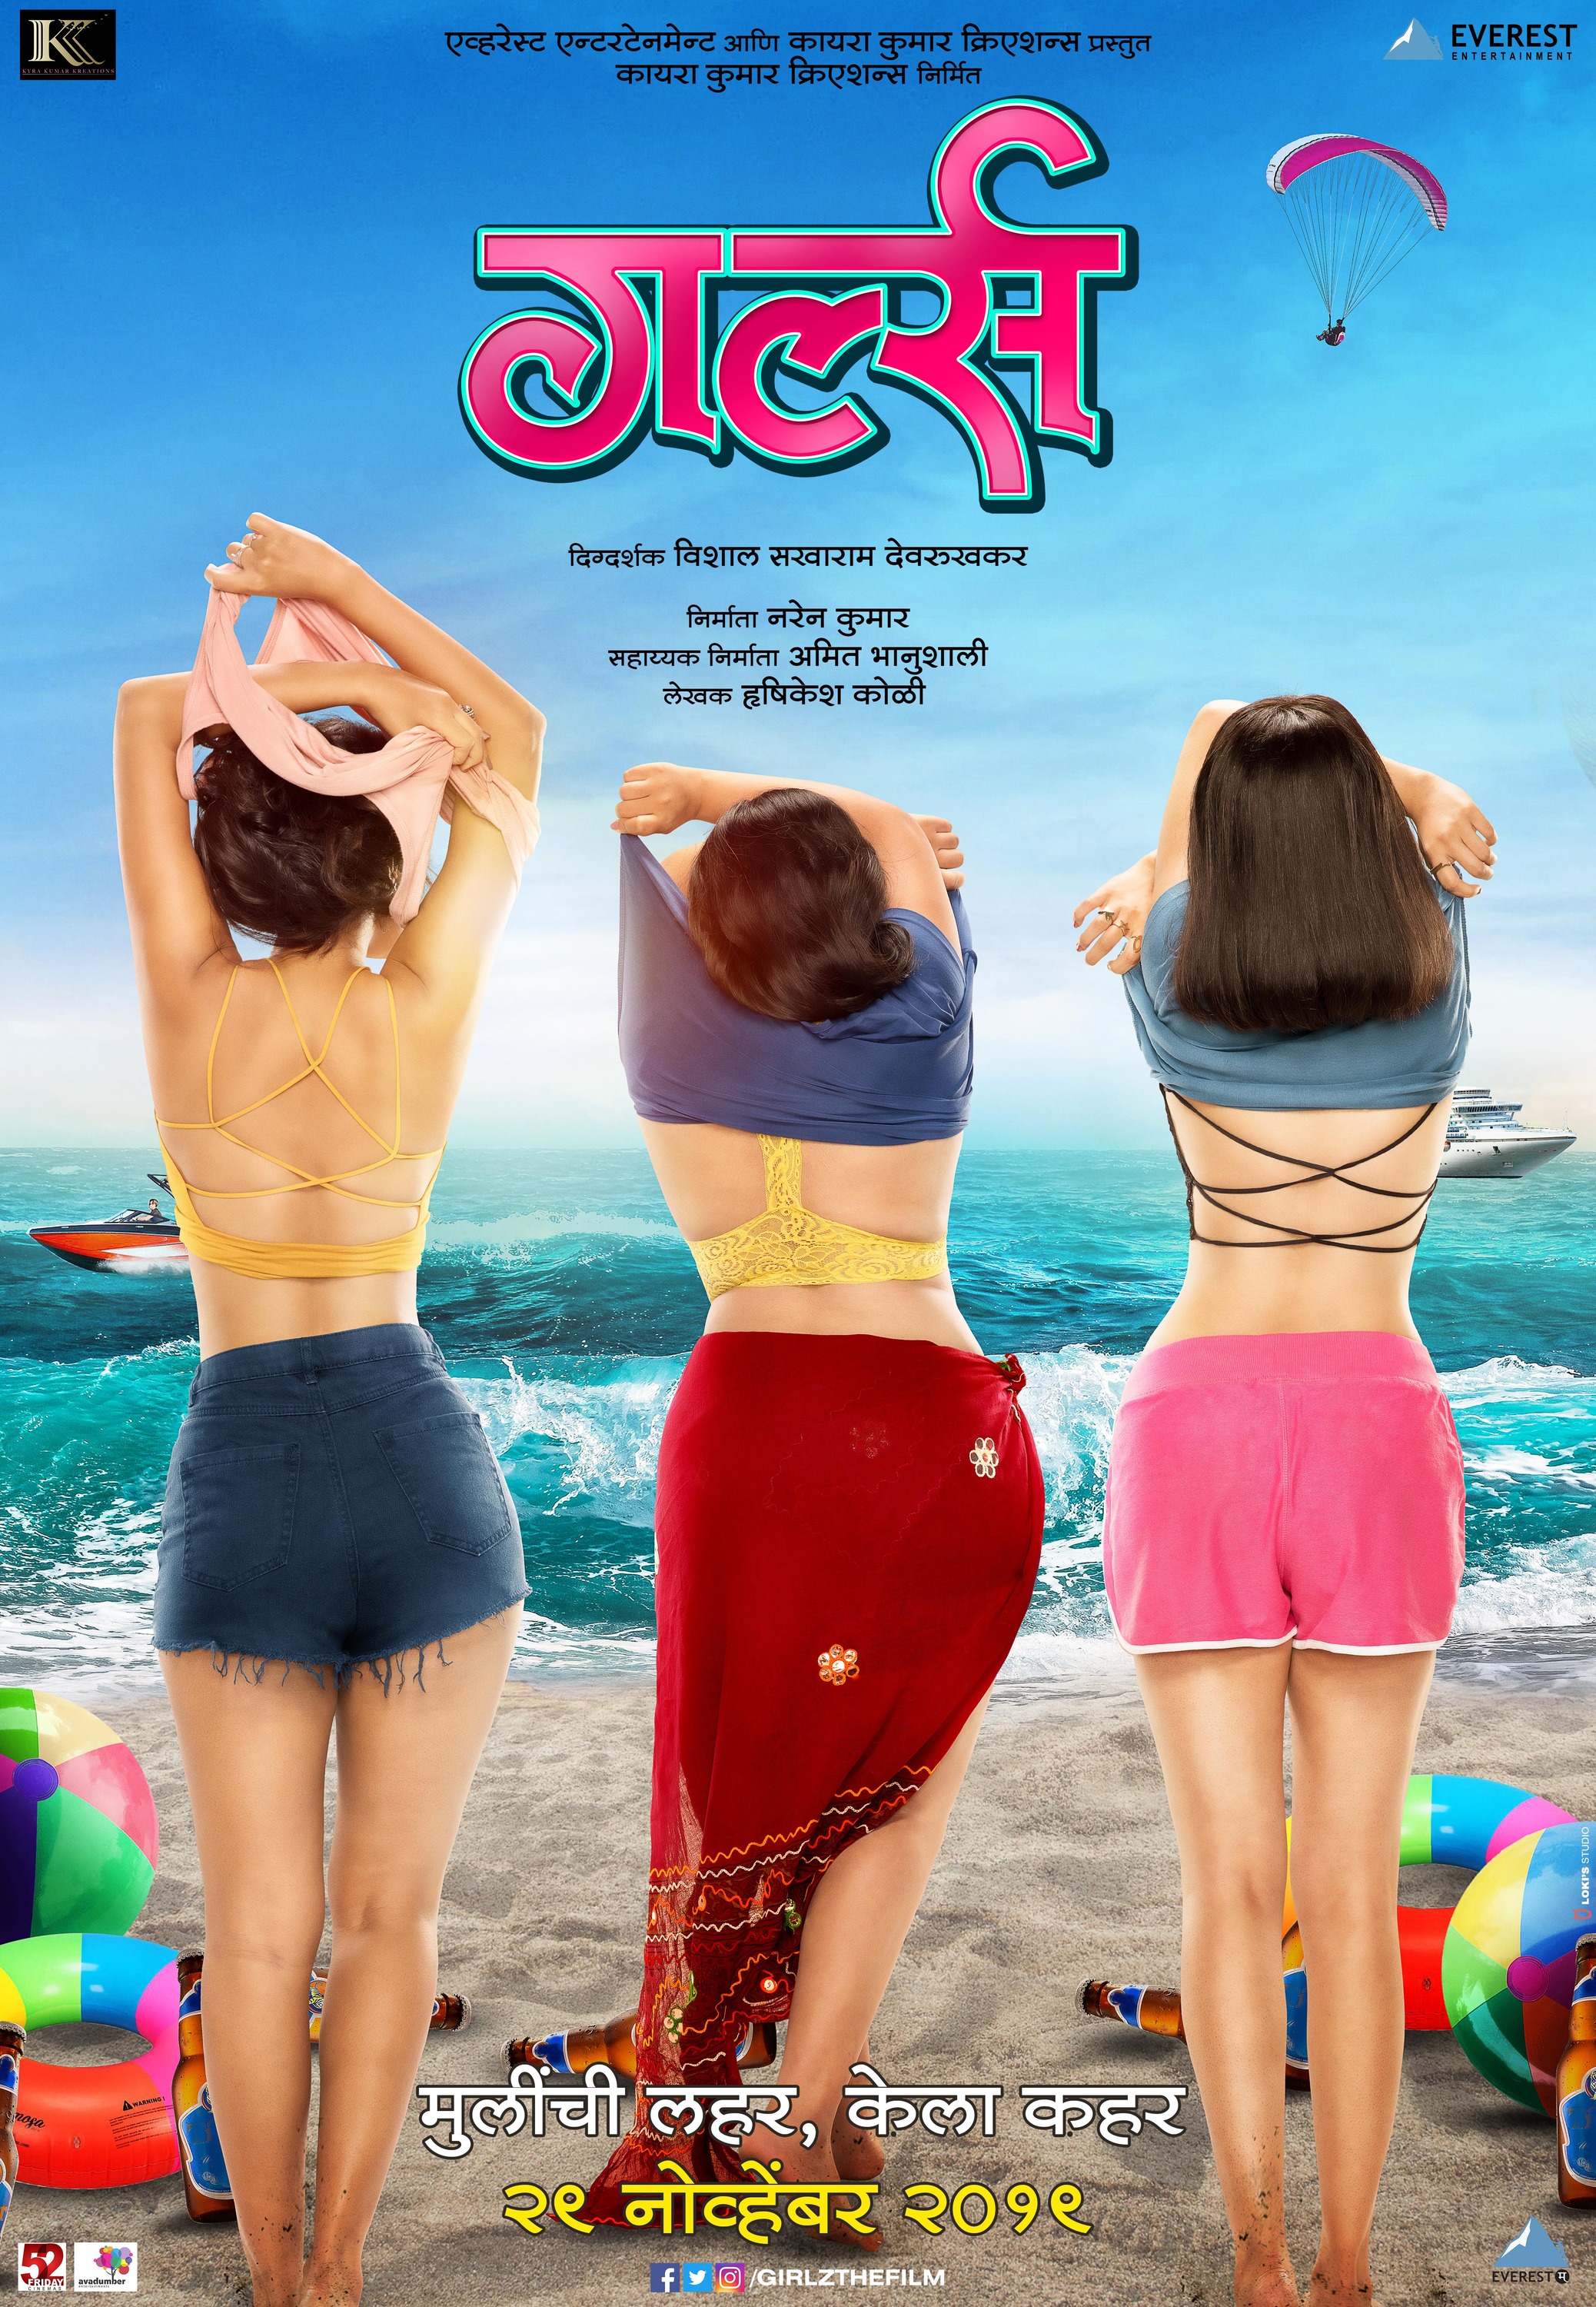 Mega Sized Movie Poster Image for Girlz (#1 of 8)